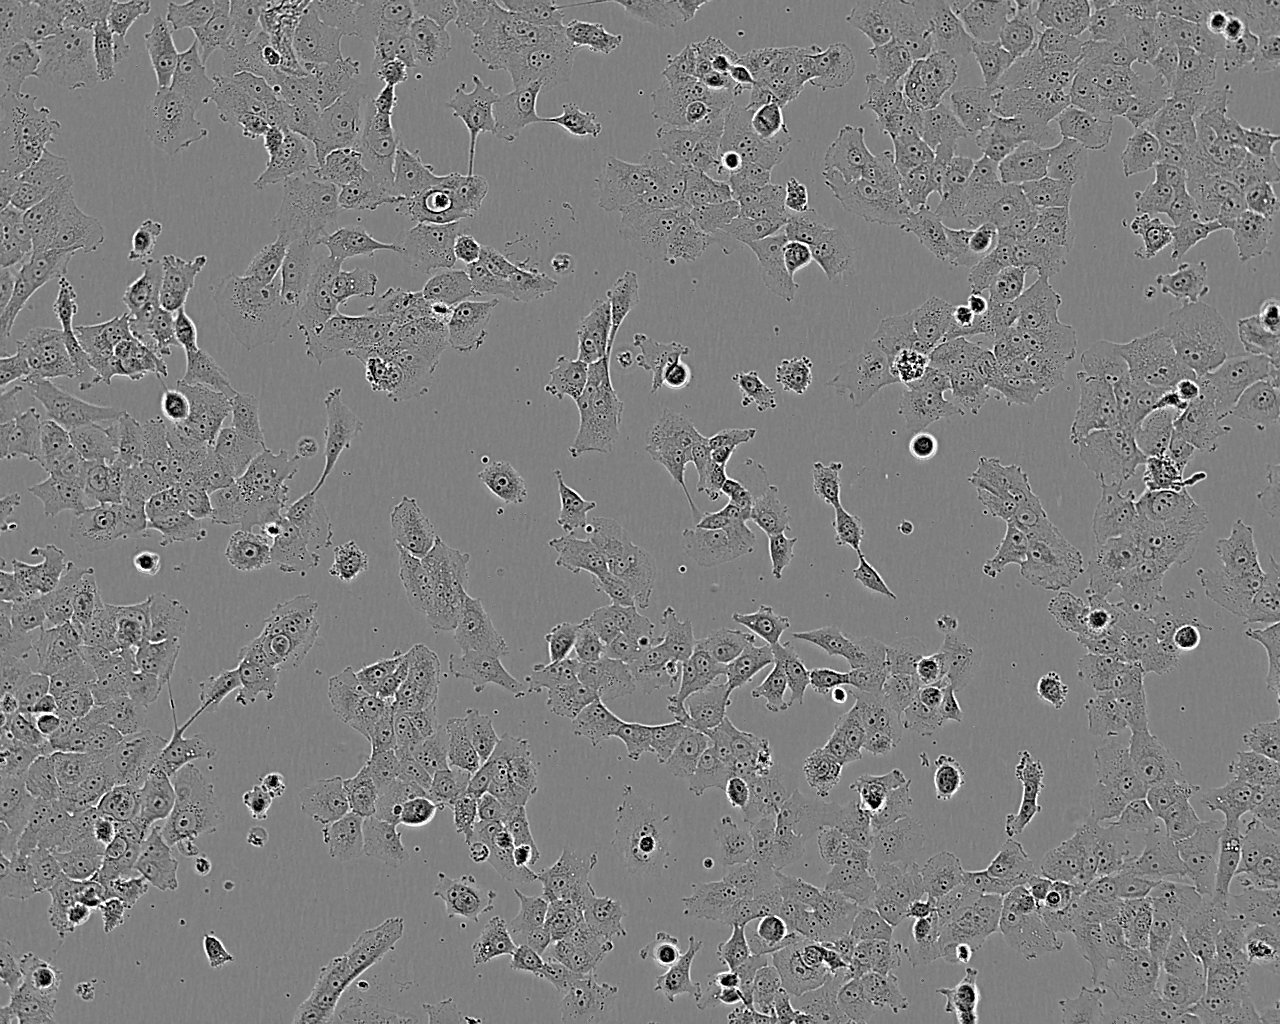 COS-1 epithelioid cellsSV40转化的非洲绿猴肾细胞系,COS-1 epithelioid cells